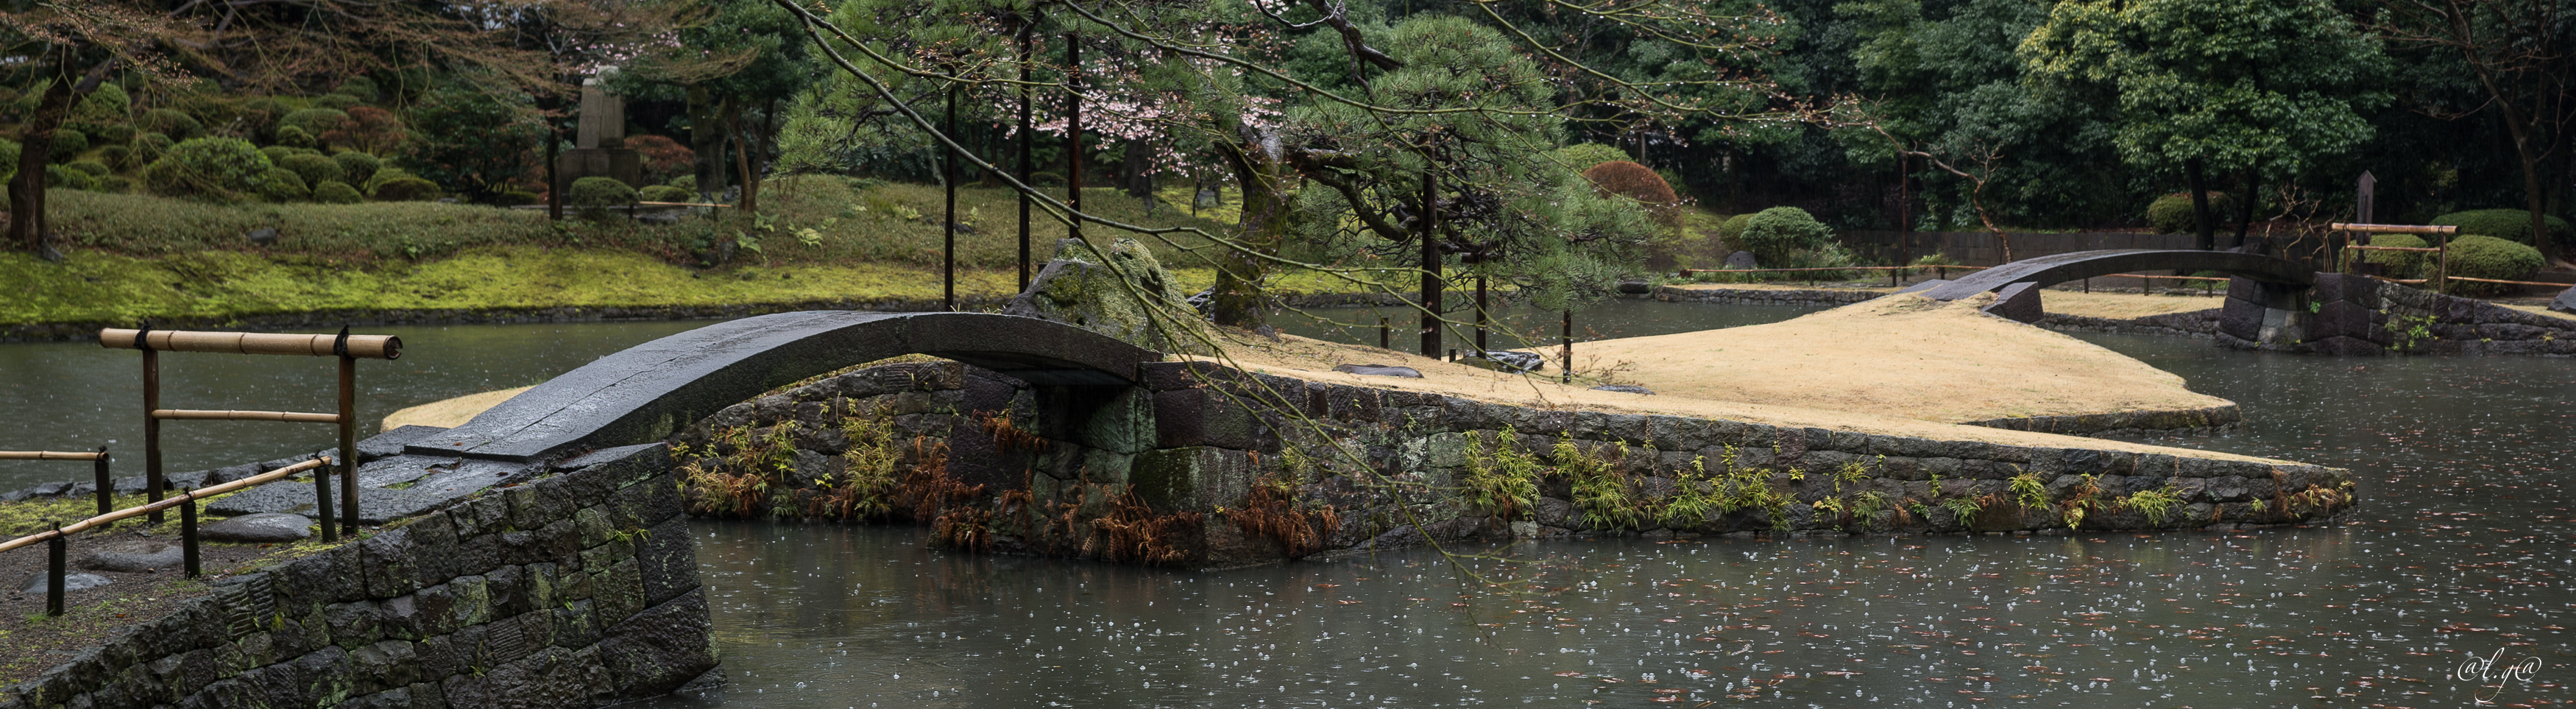 Jardin Koishikawa Korakuen : le jardin intérieur